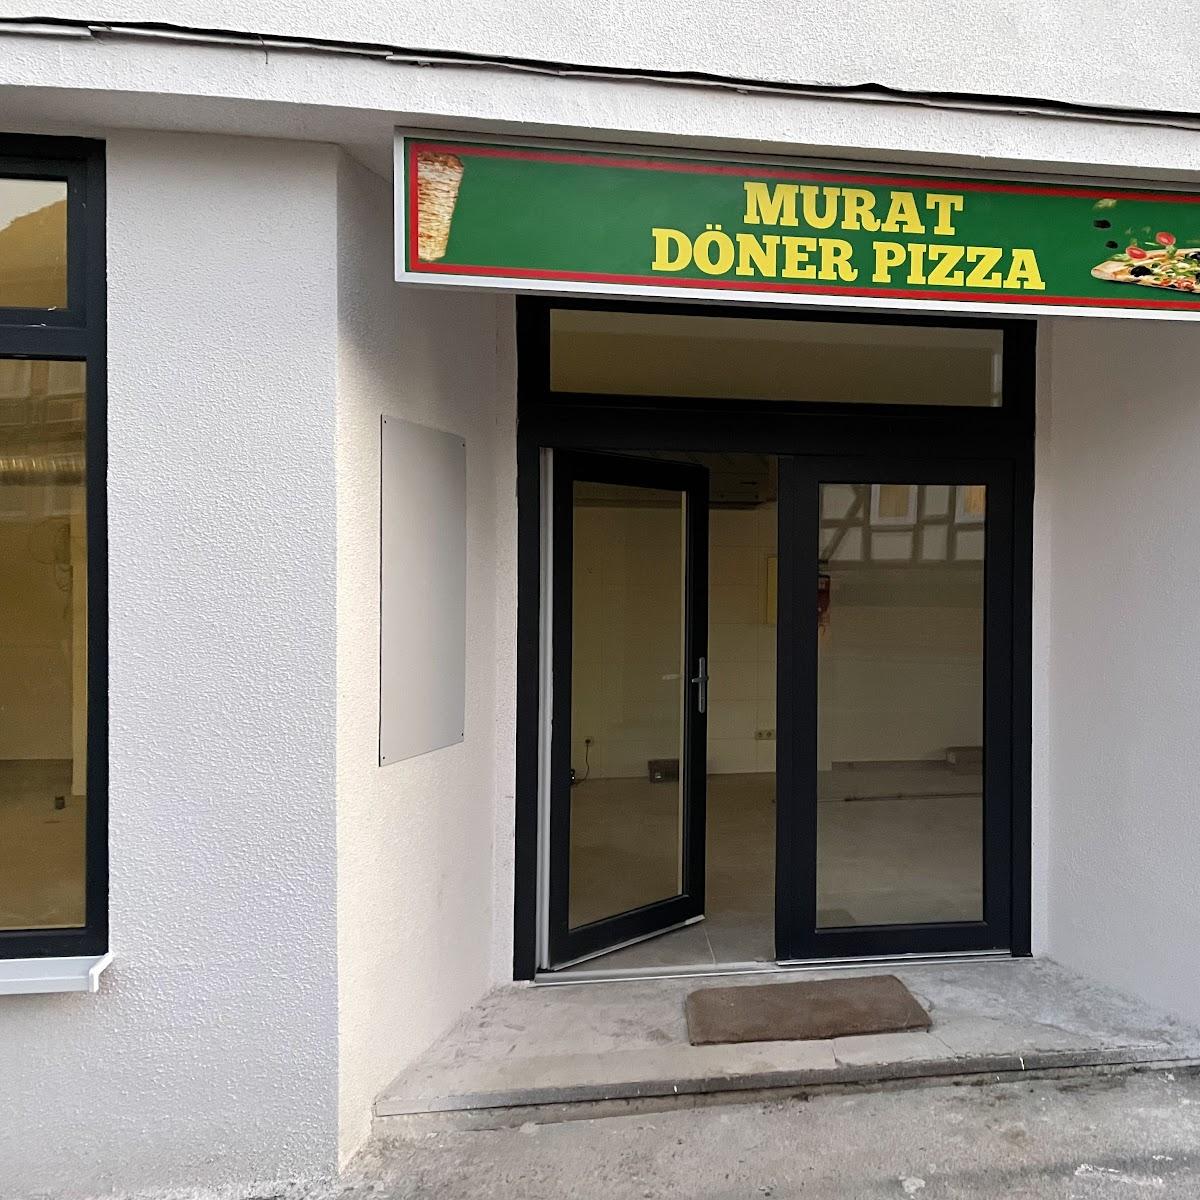 Restaurant "Murat Döner und Pizzeria" in Vöhl